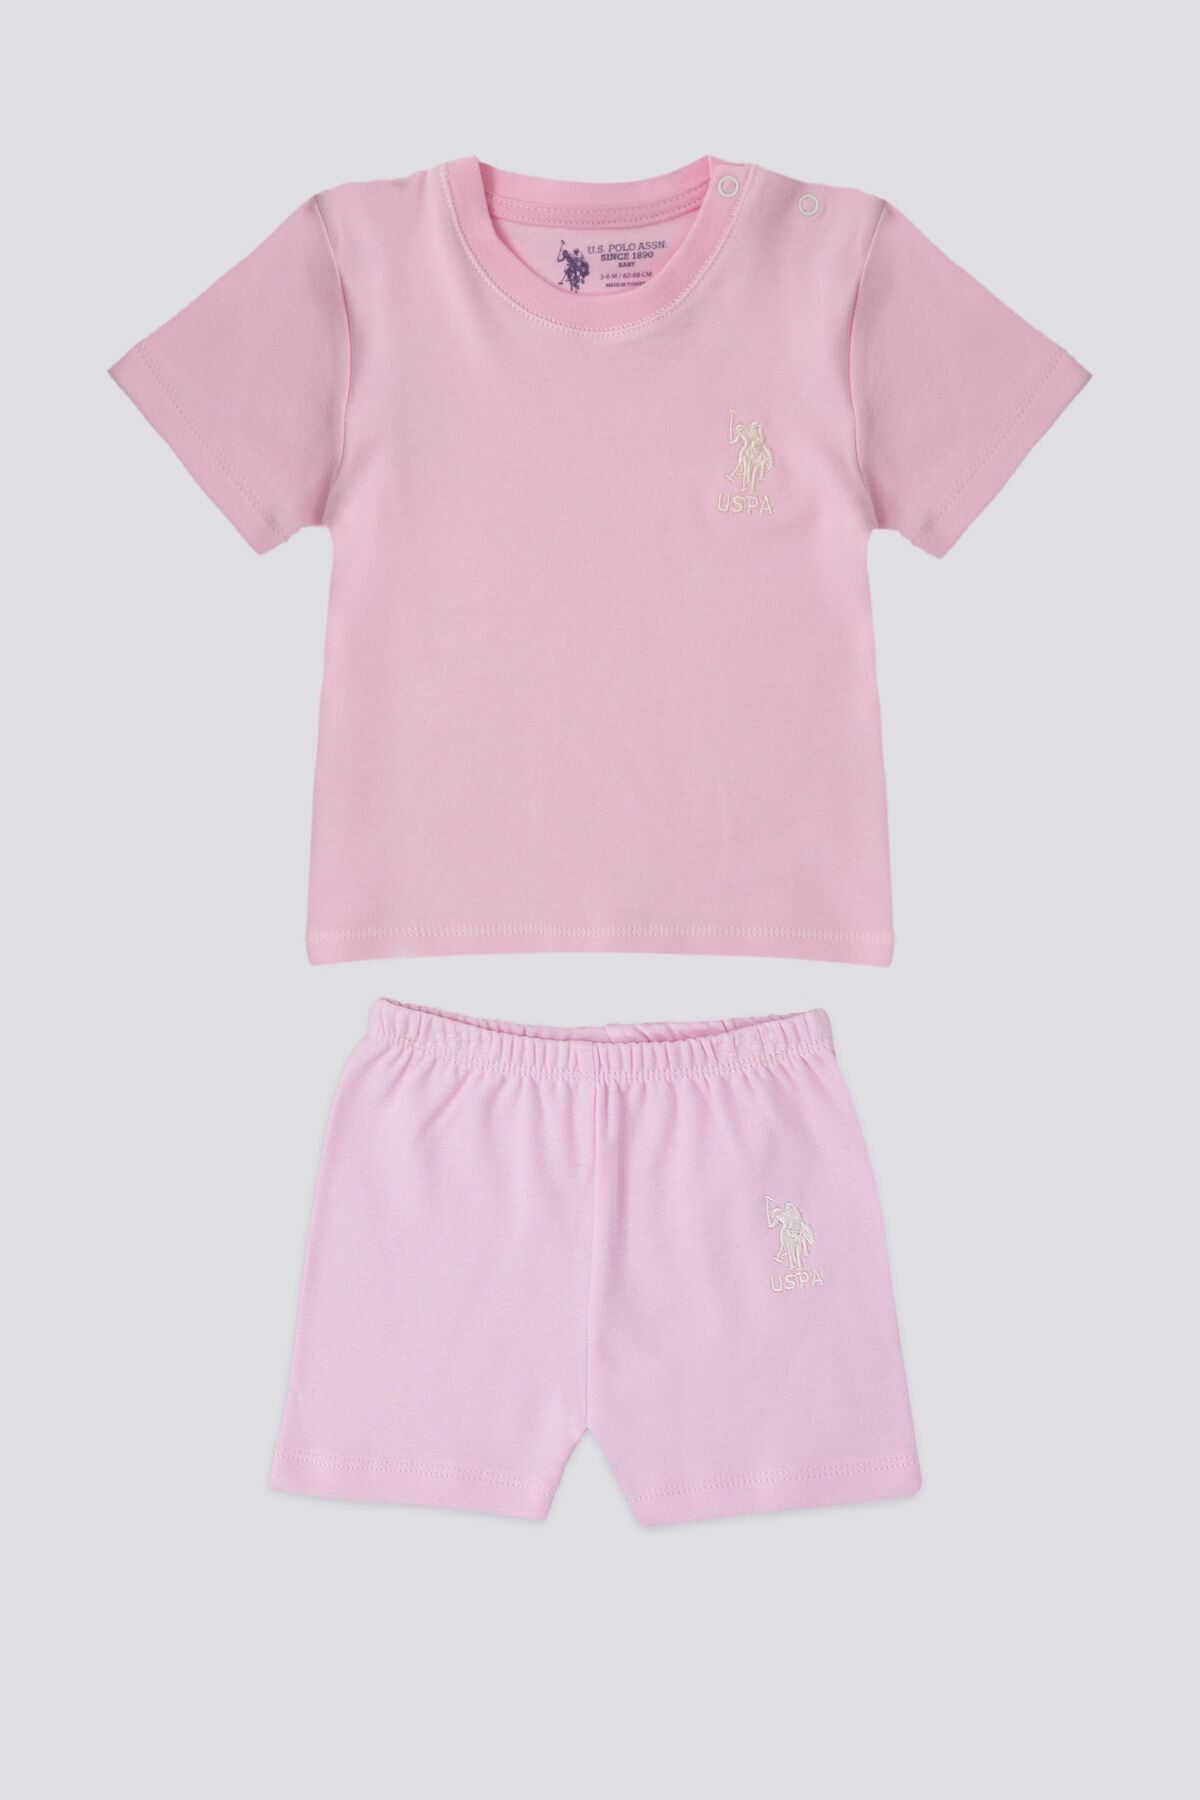 U.S. Polo Assn. U.s. Polo Assn Candy Pink Açık Pembe Bebek Tshirt Takım